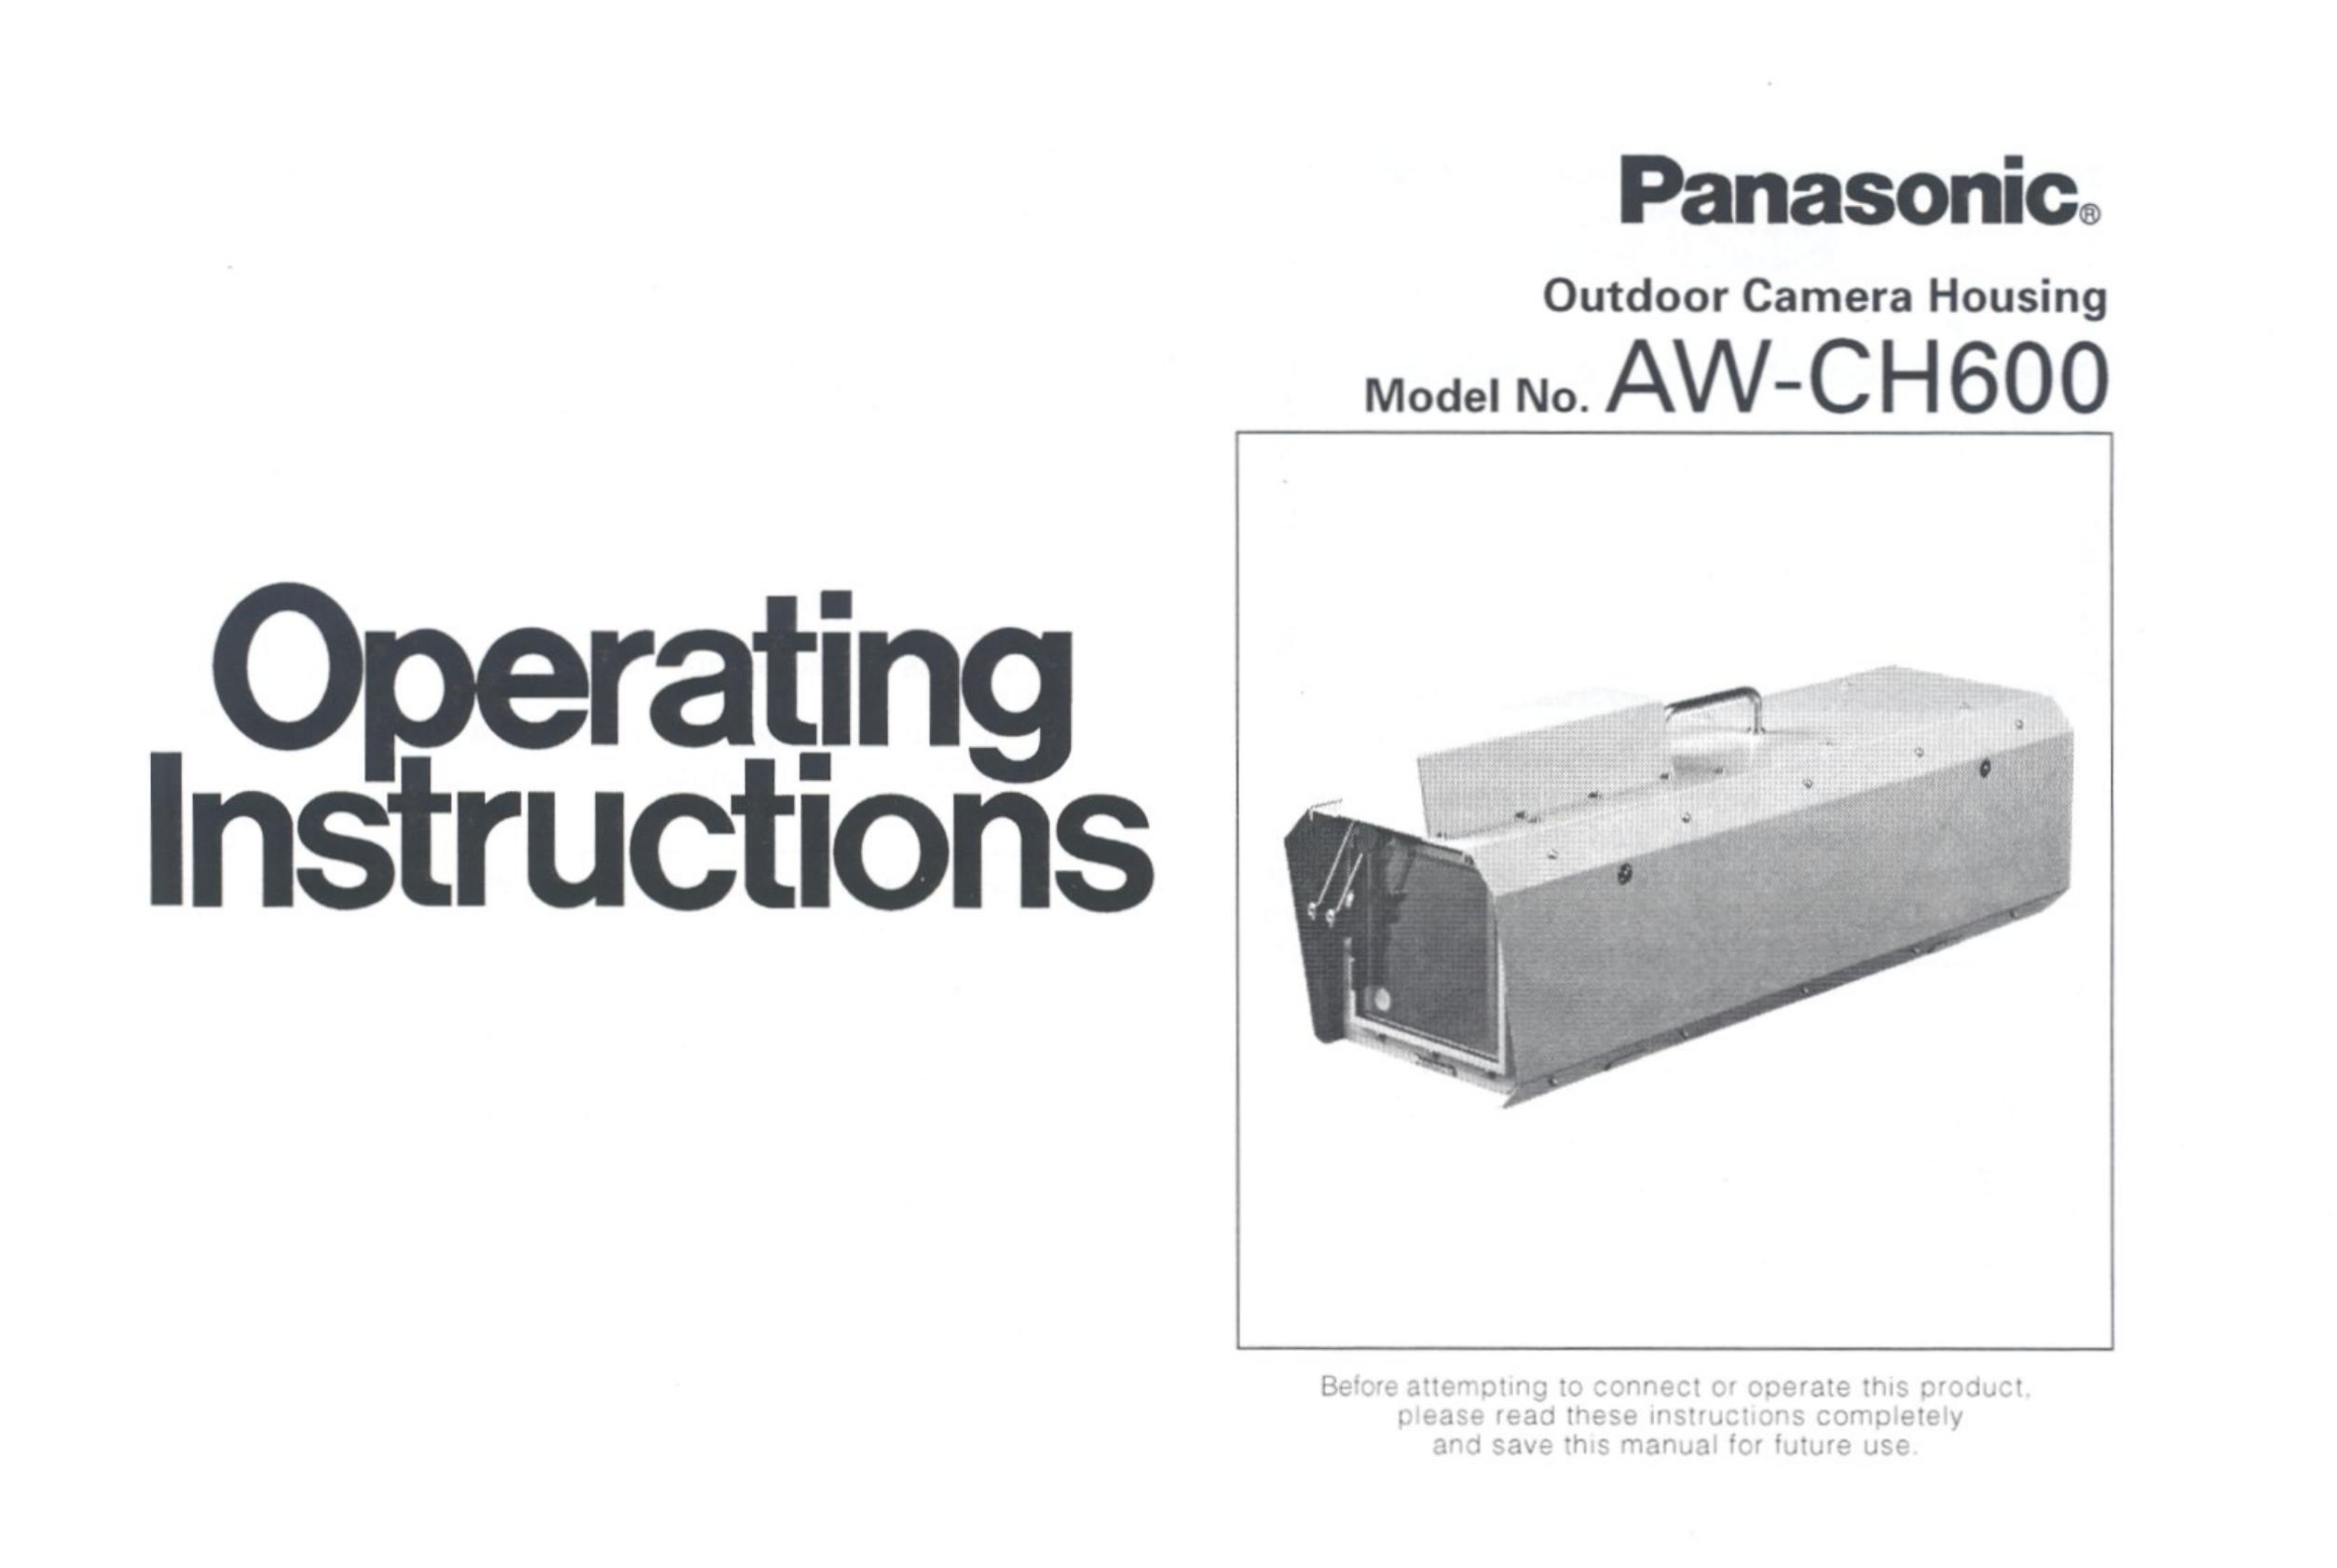 Panasonic AW-CH600 Security Camera User Manual